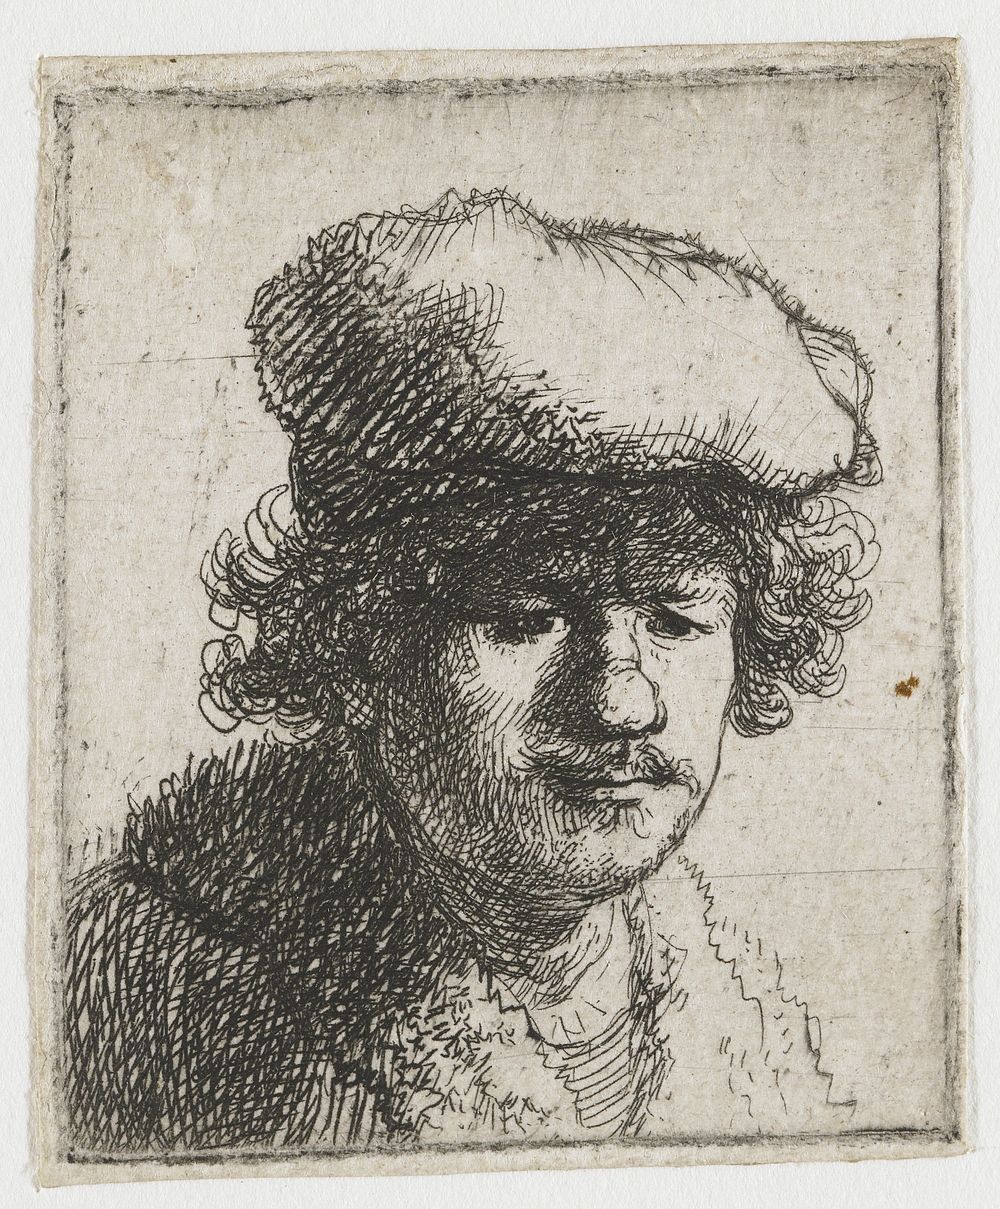 Self-portrait with cap pulled forward (c. 1630) by Rembrandt van Rijn and Rembrandt van Rijn